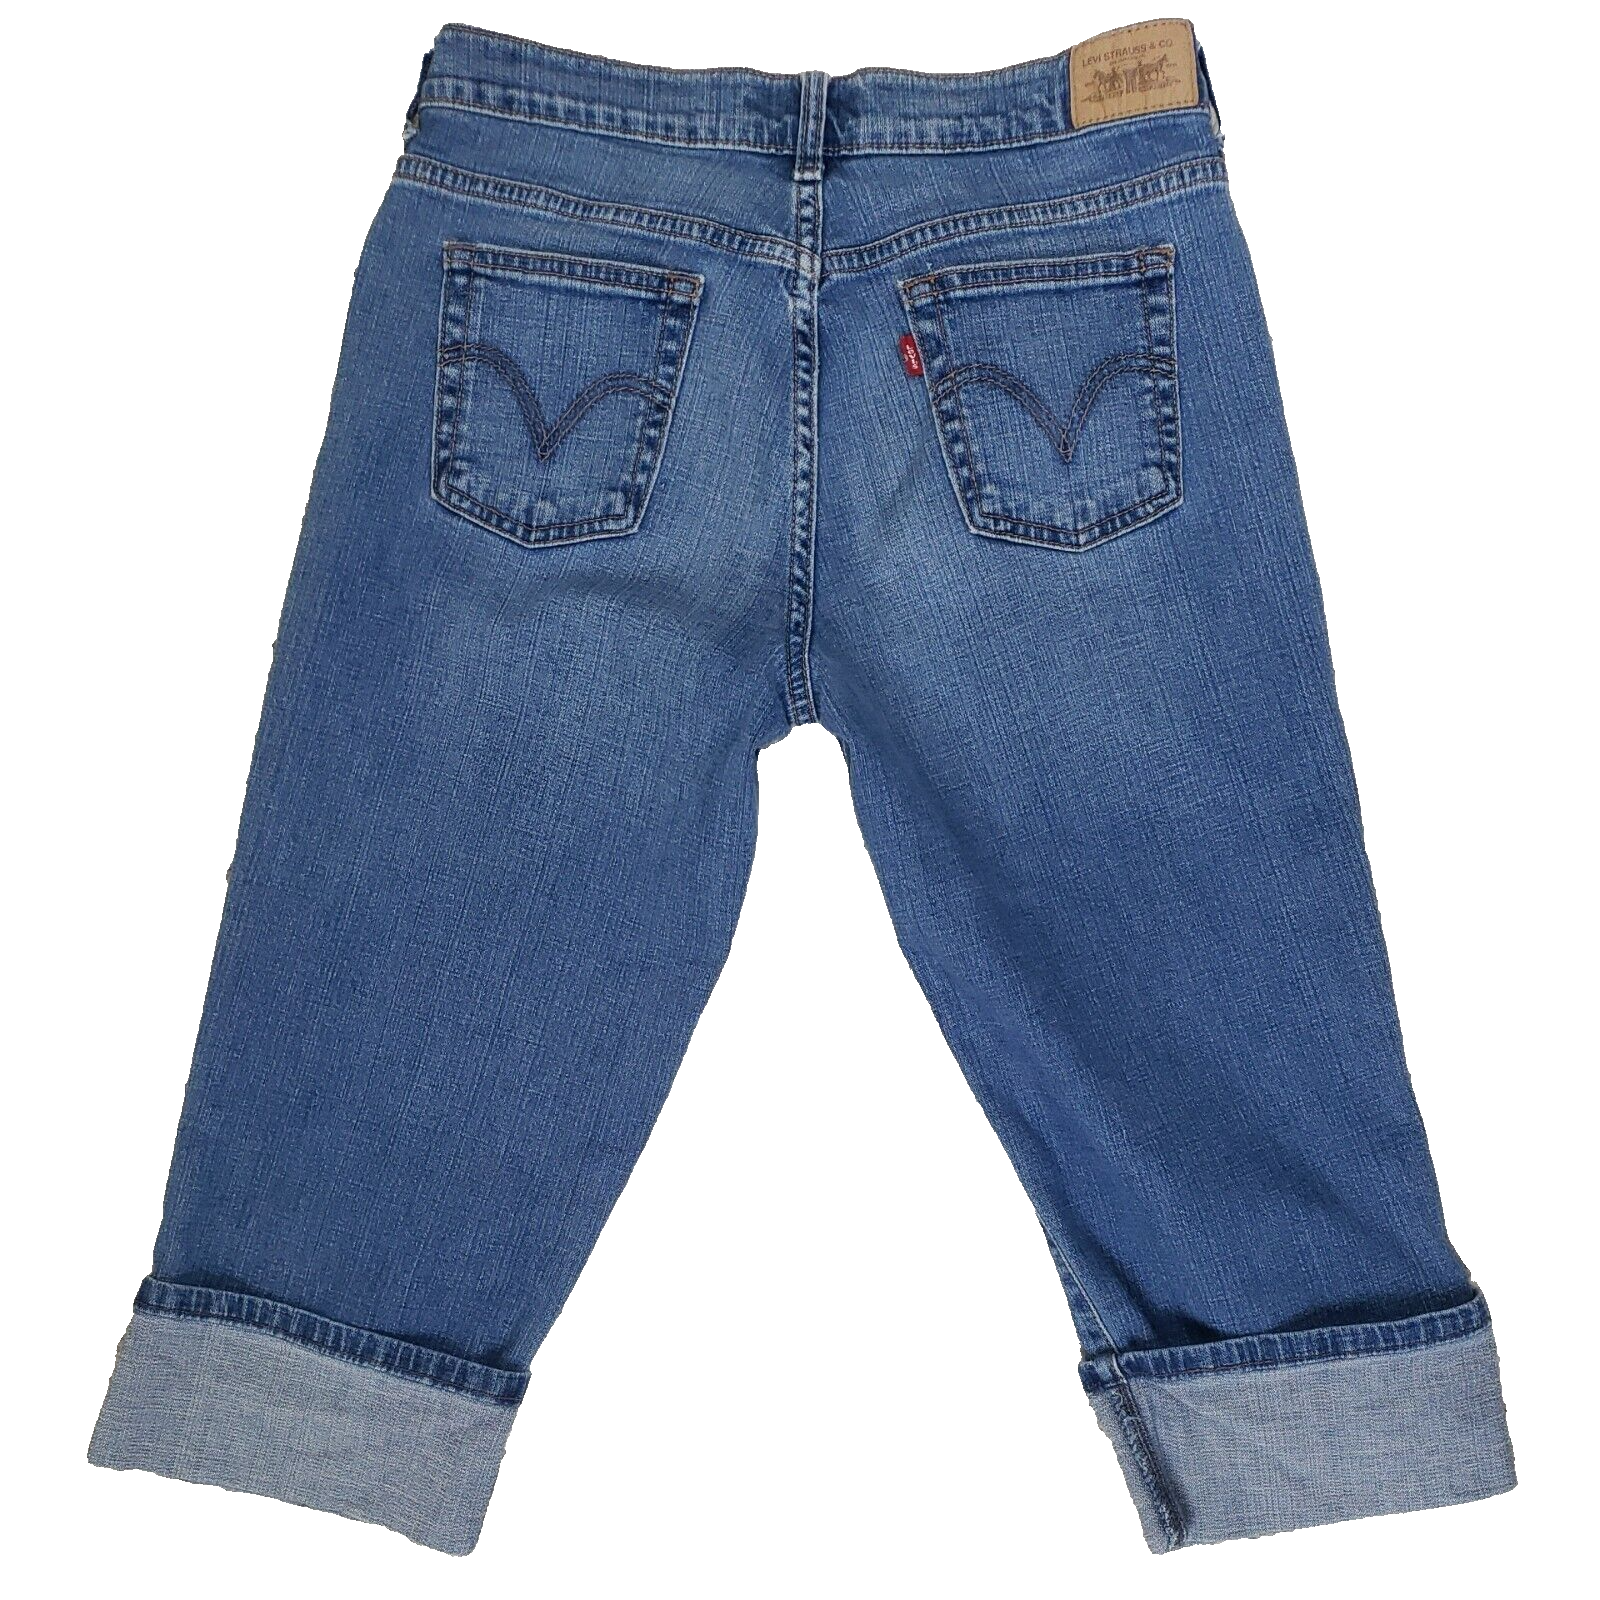 Primary image for Levis 515 Cropped Jeans Womens 6 Capri Stretch Denim Blue Medium Wash Cuffed